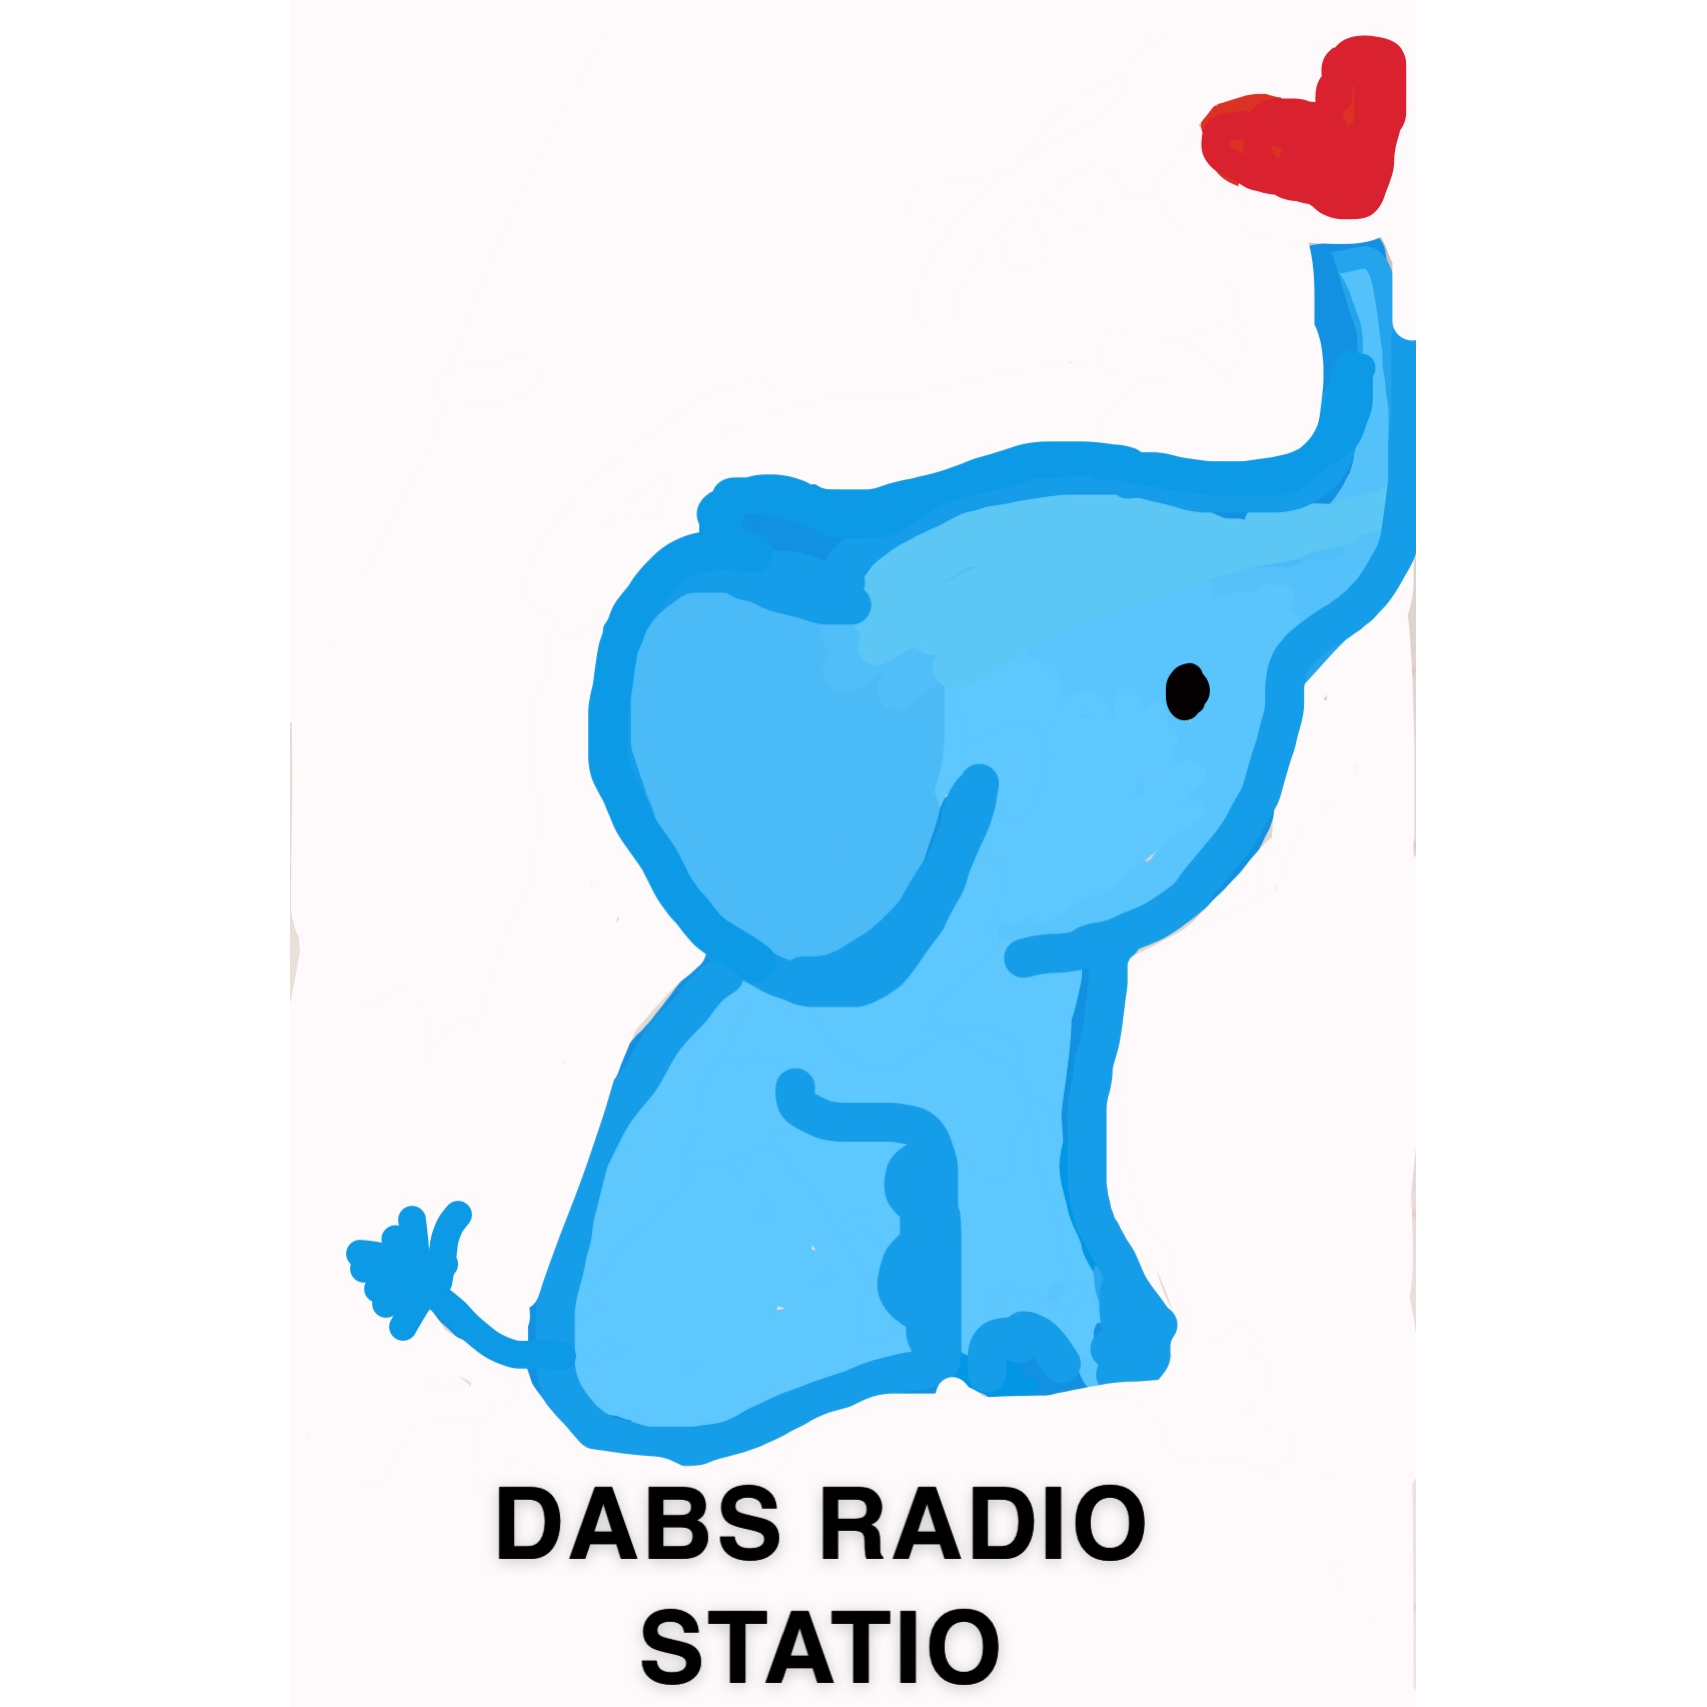 Dabs Radio Station